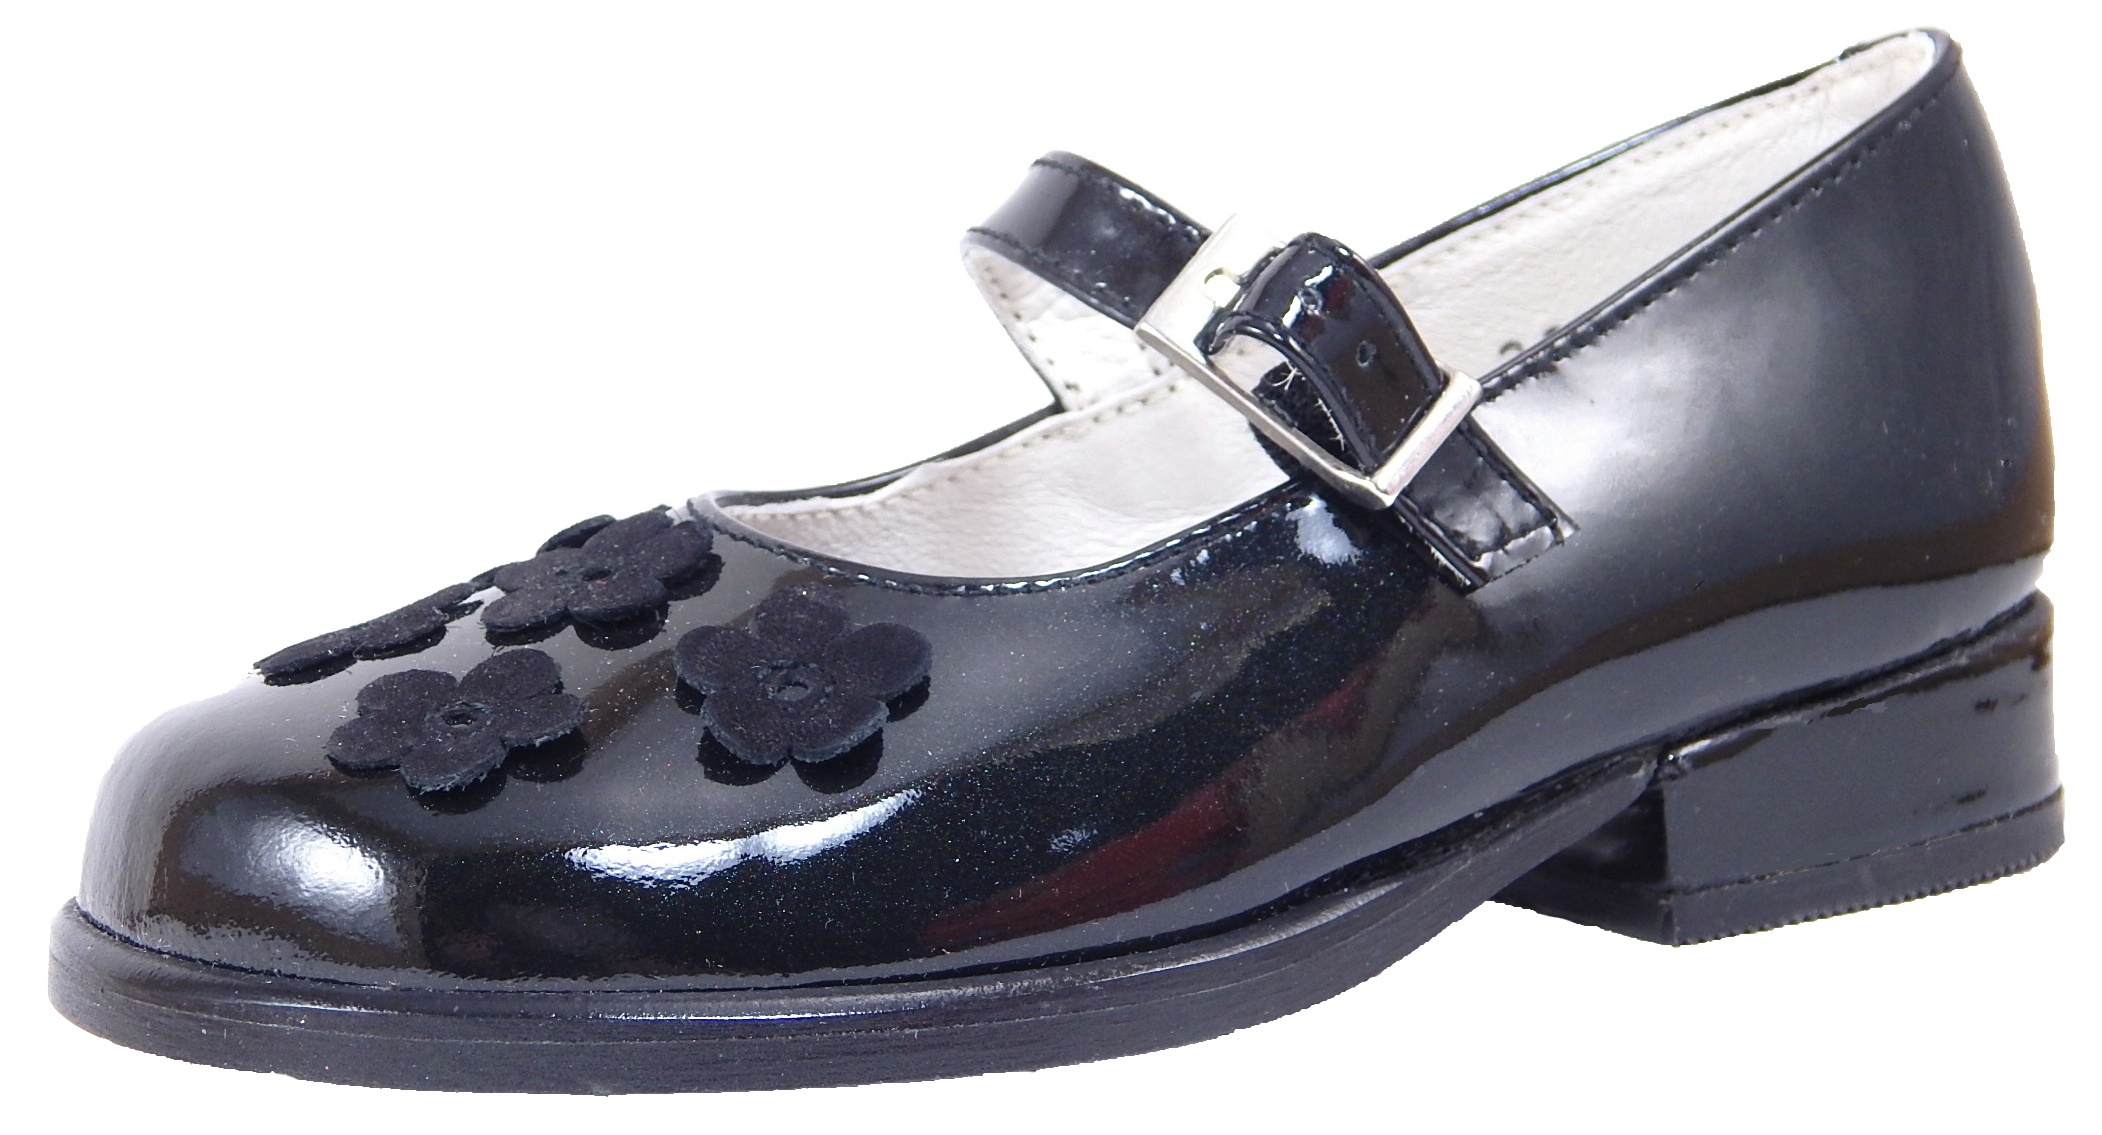 B-6124 - Black Patent Dress Shoes